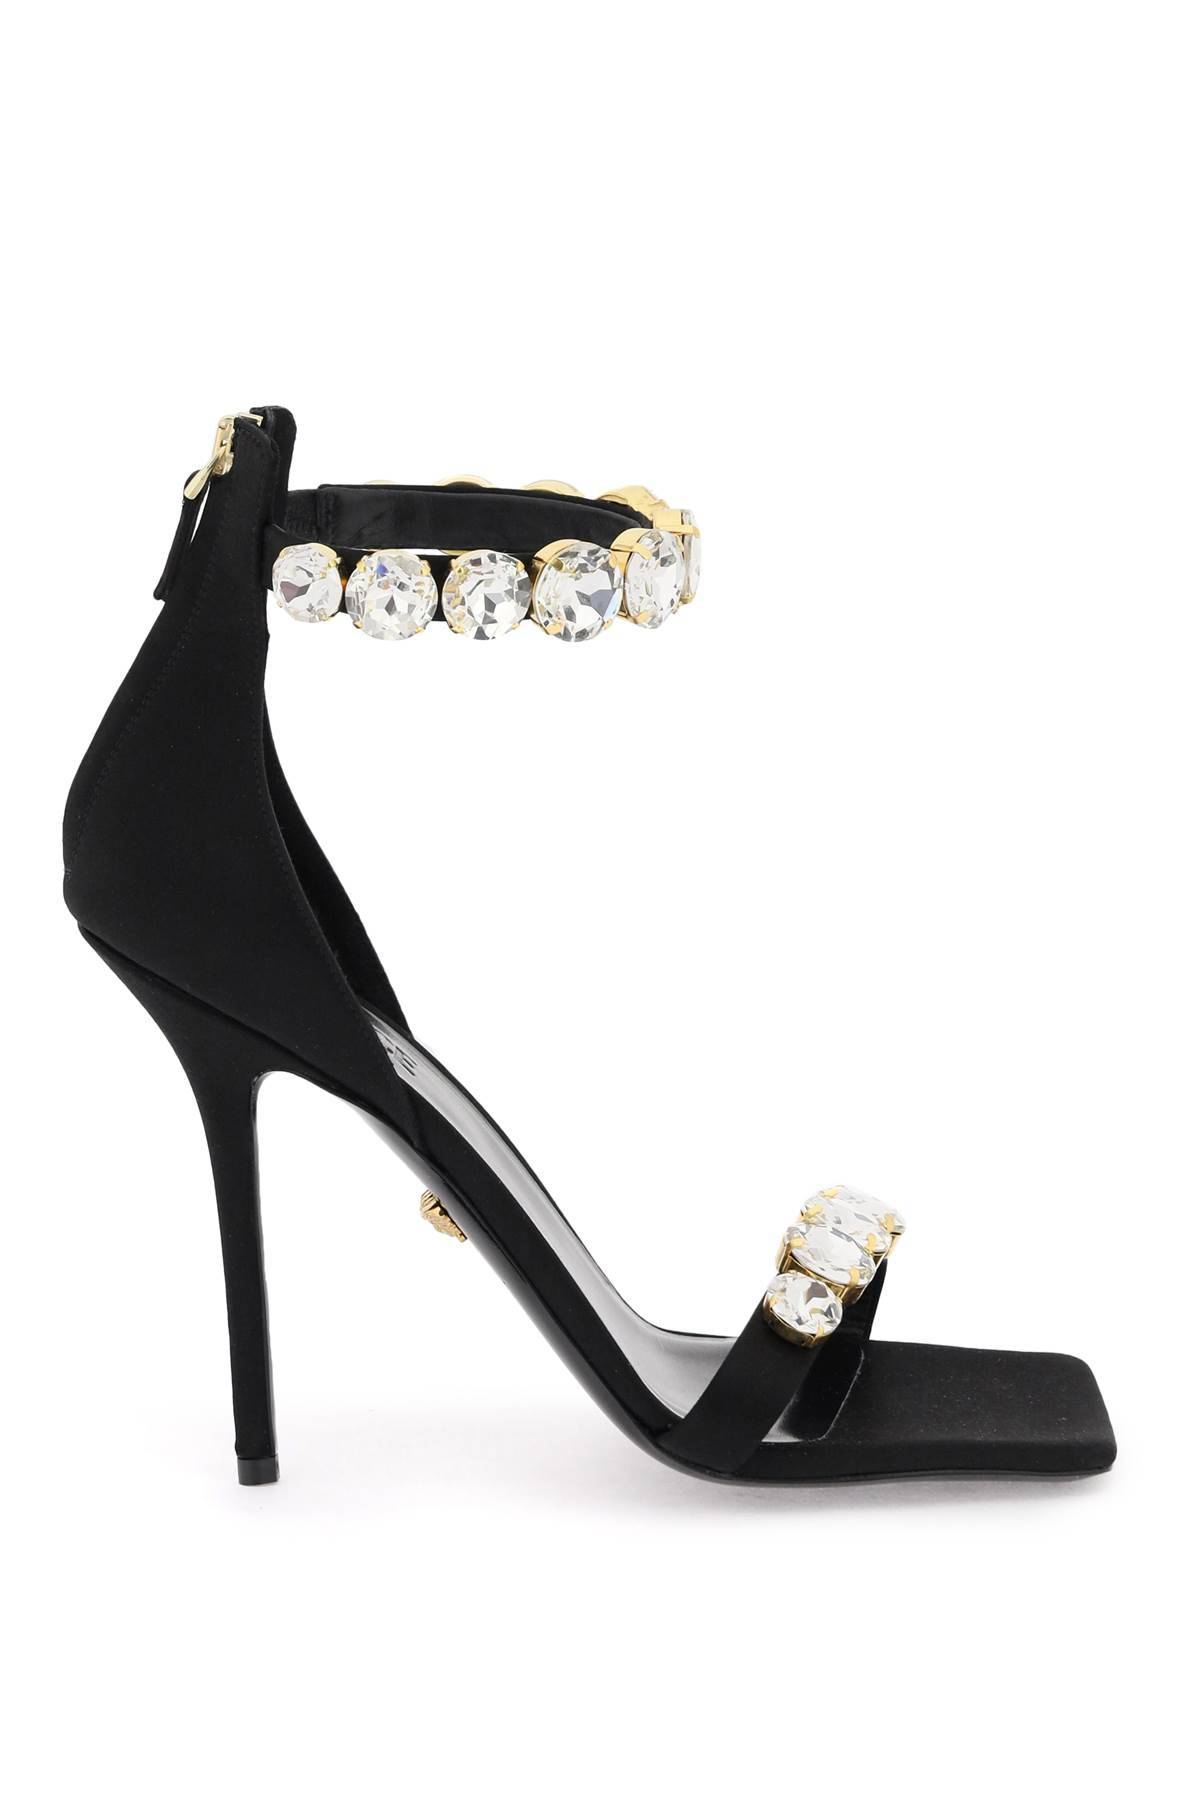 Versace VERSACE satin sandals with crystals